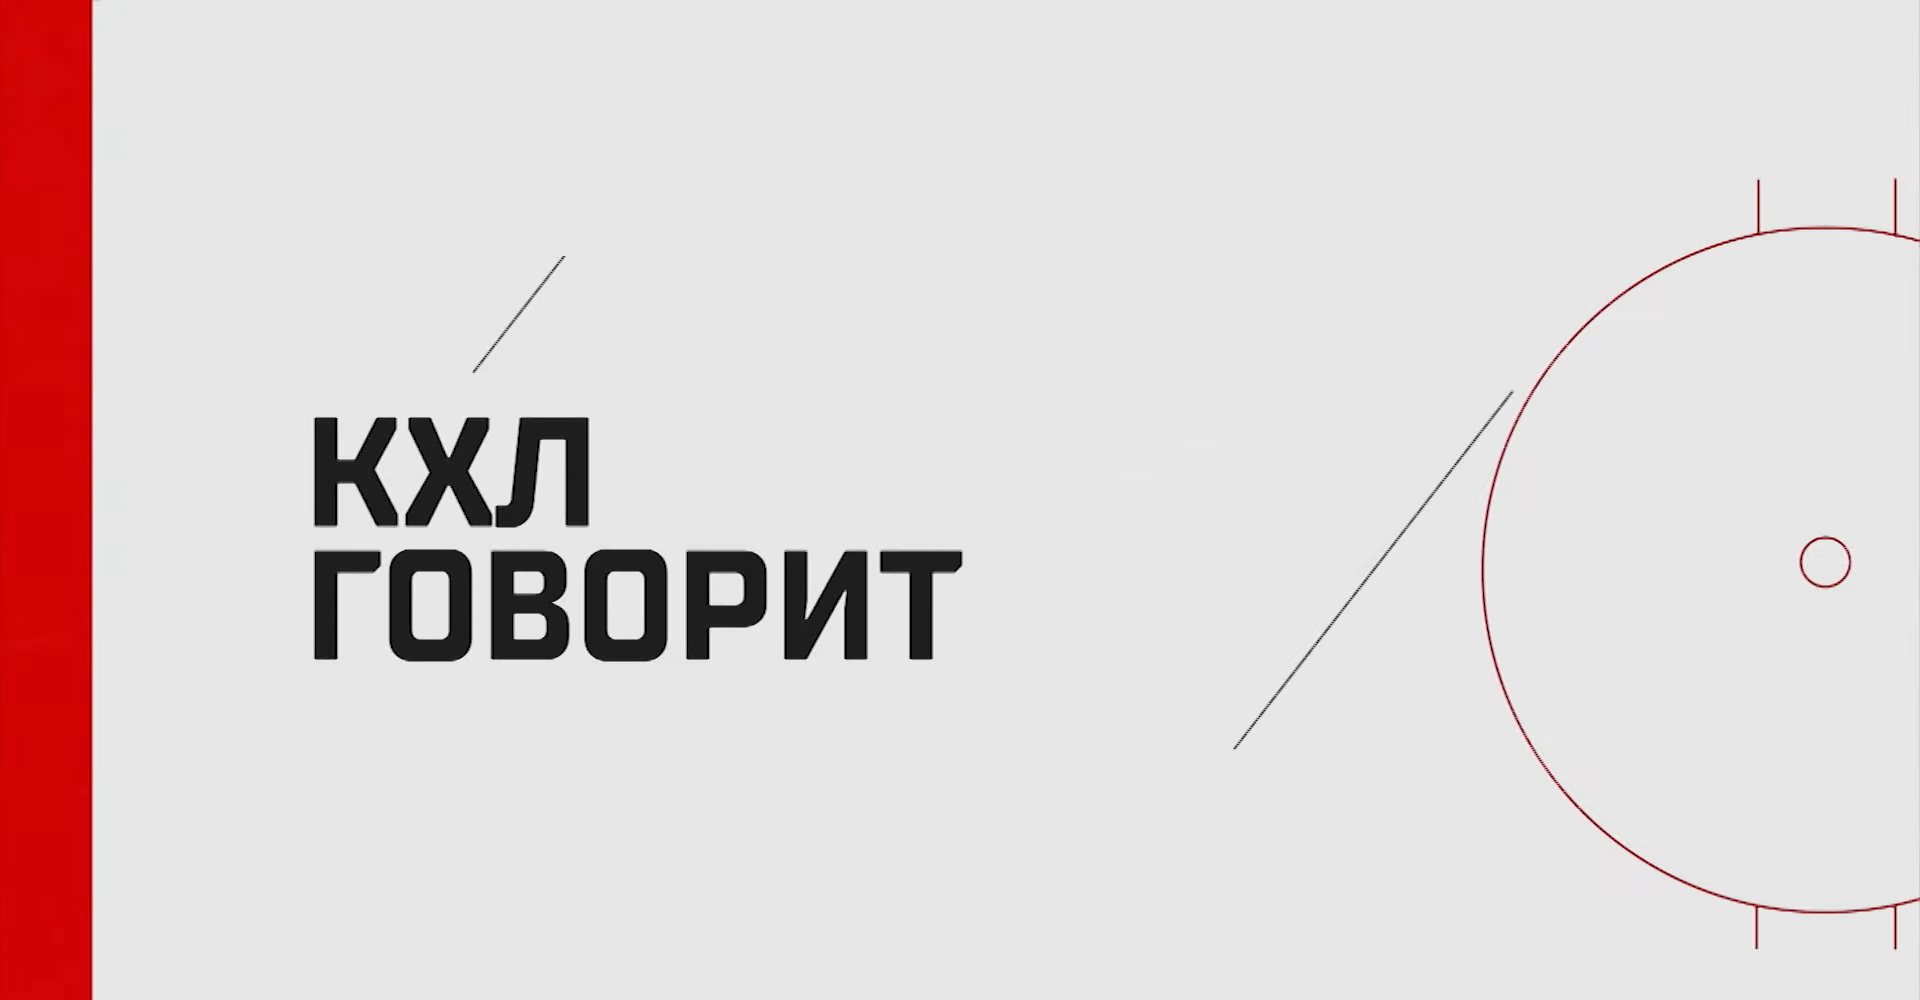 KHL says - Igor Larionov